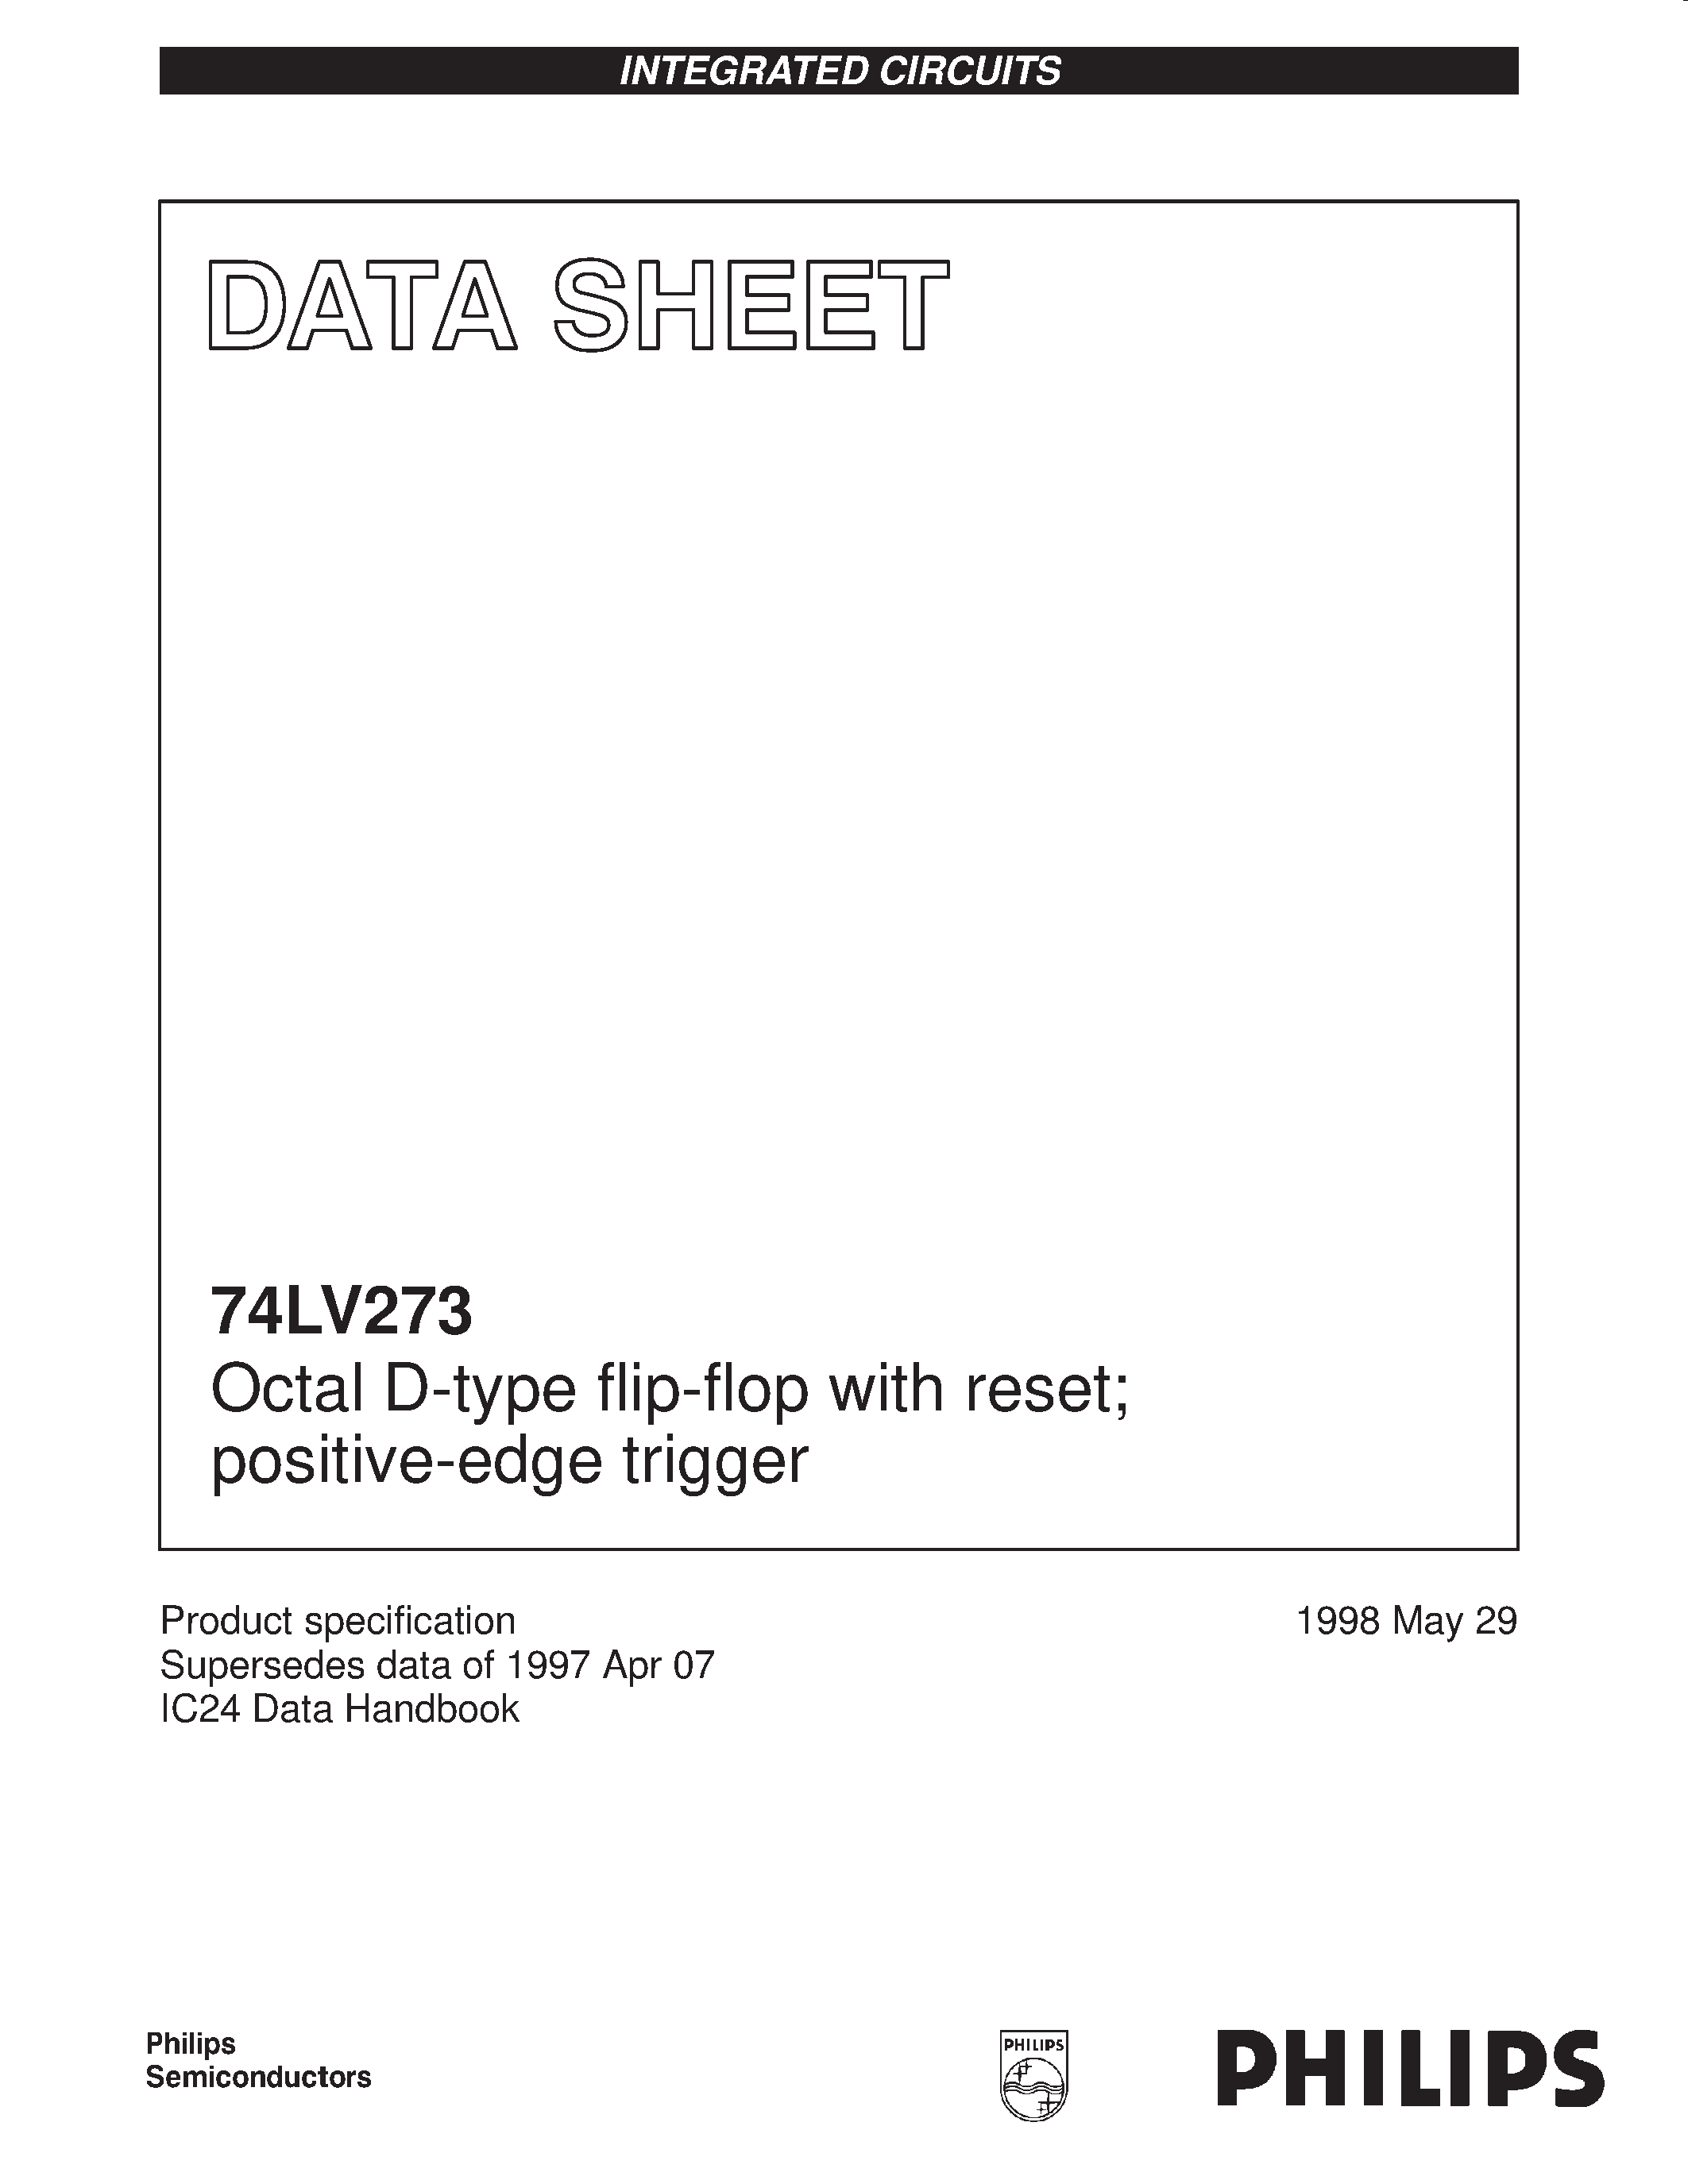 Даташит 74LV273 - Octal D-type flip-flop with reset; positive-edge trigger страница 1